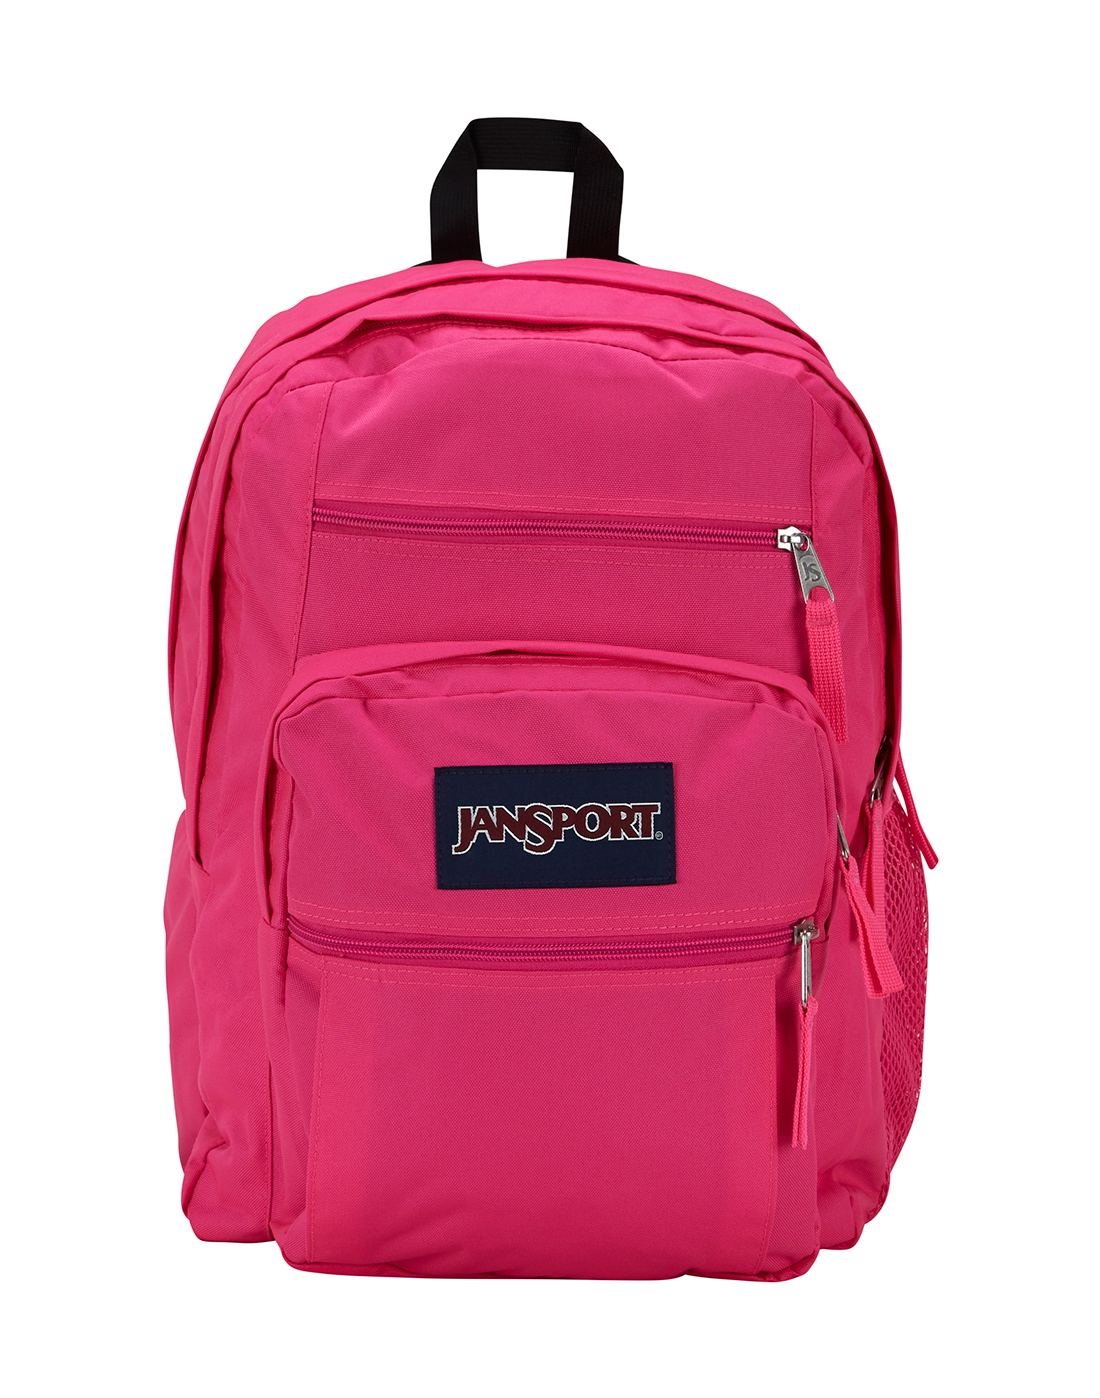 pink jansport bookbag